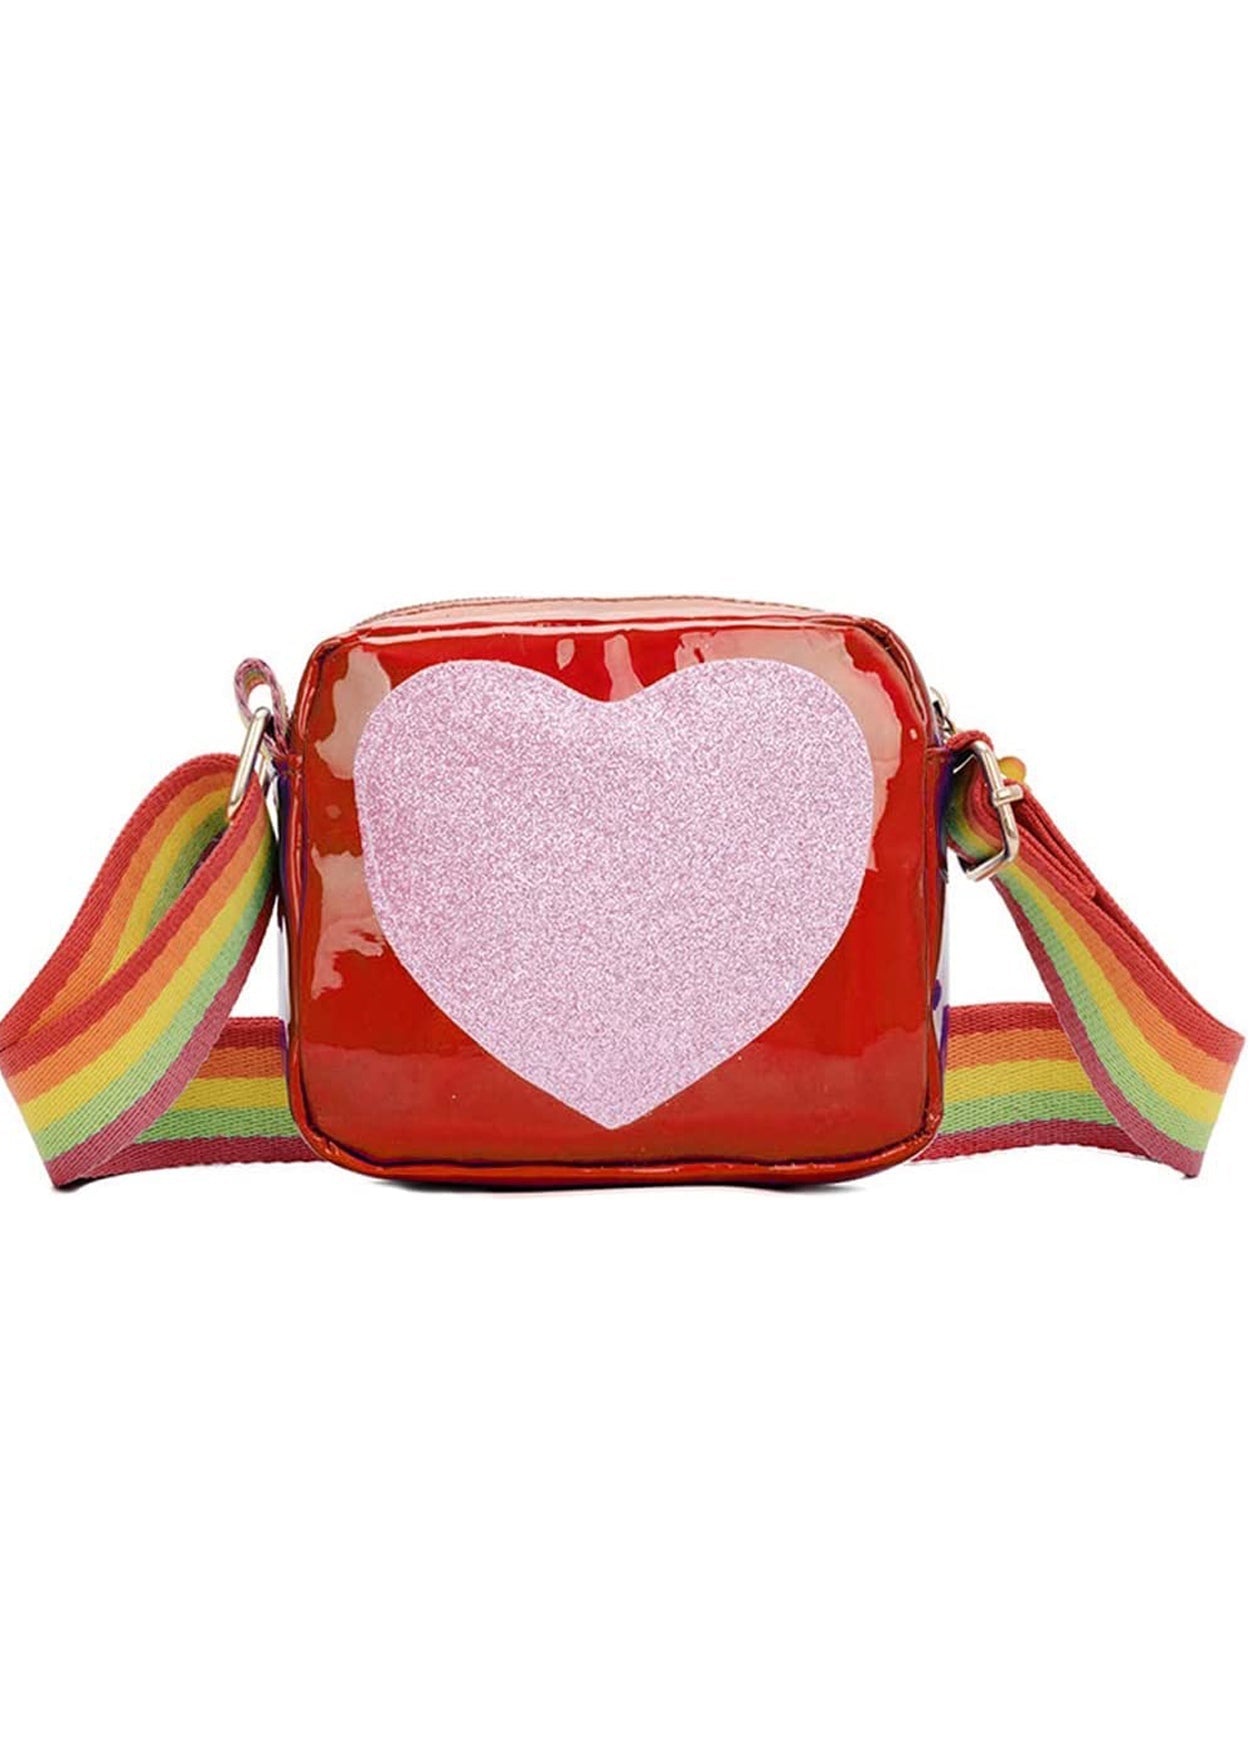 Shimmer & Glitter Hearts Bag in Red